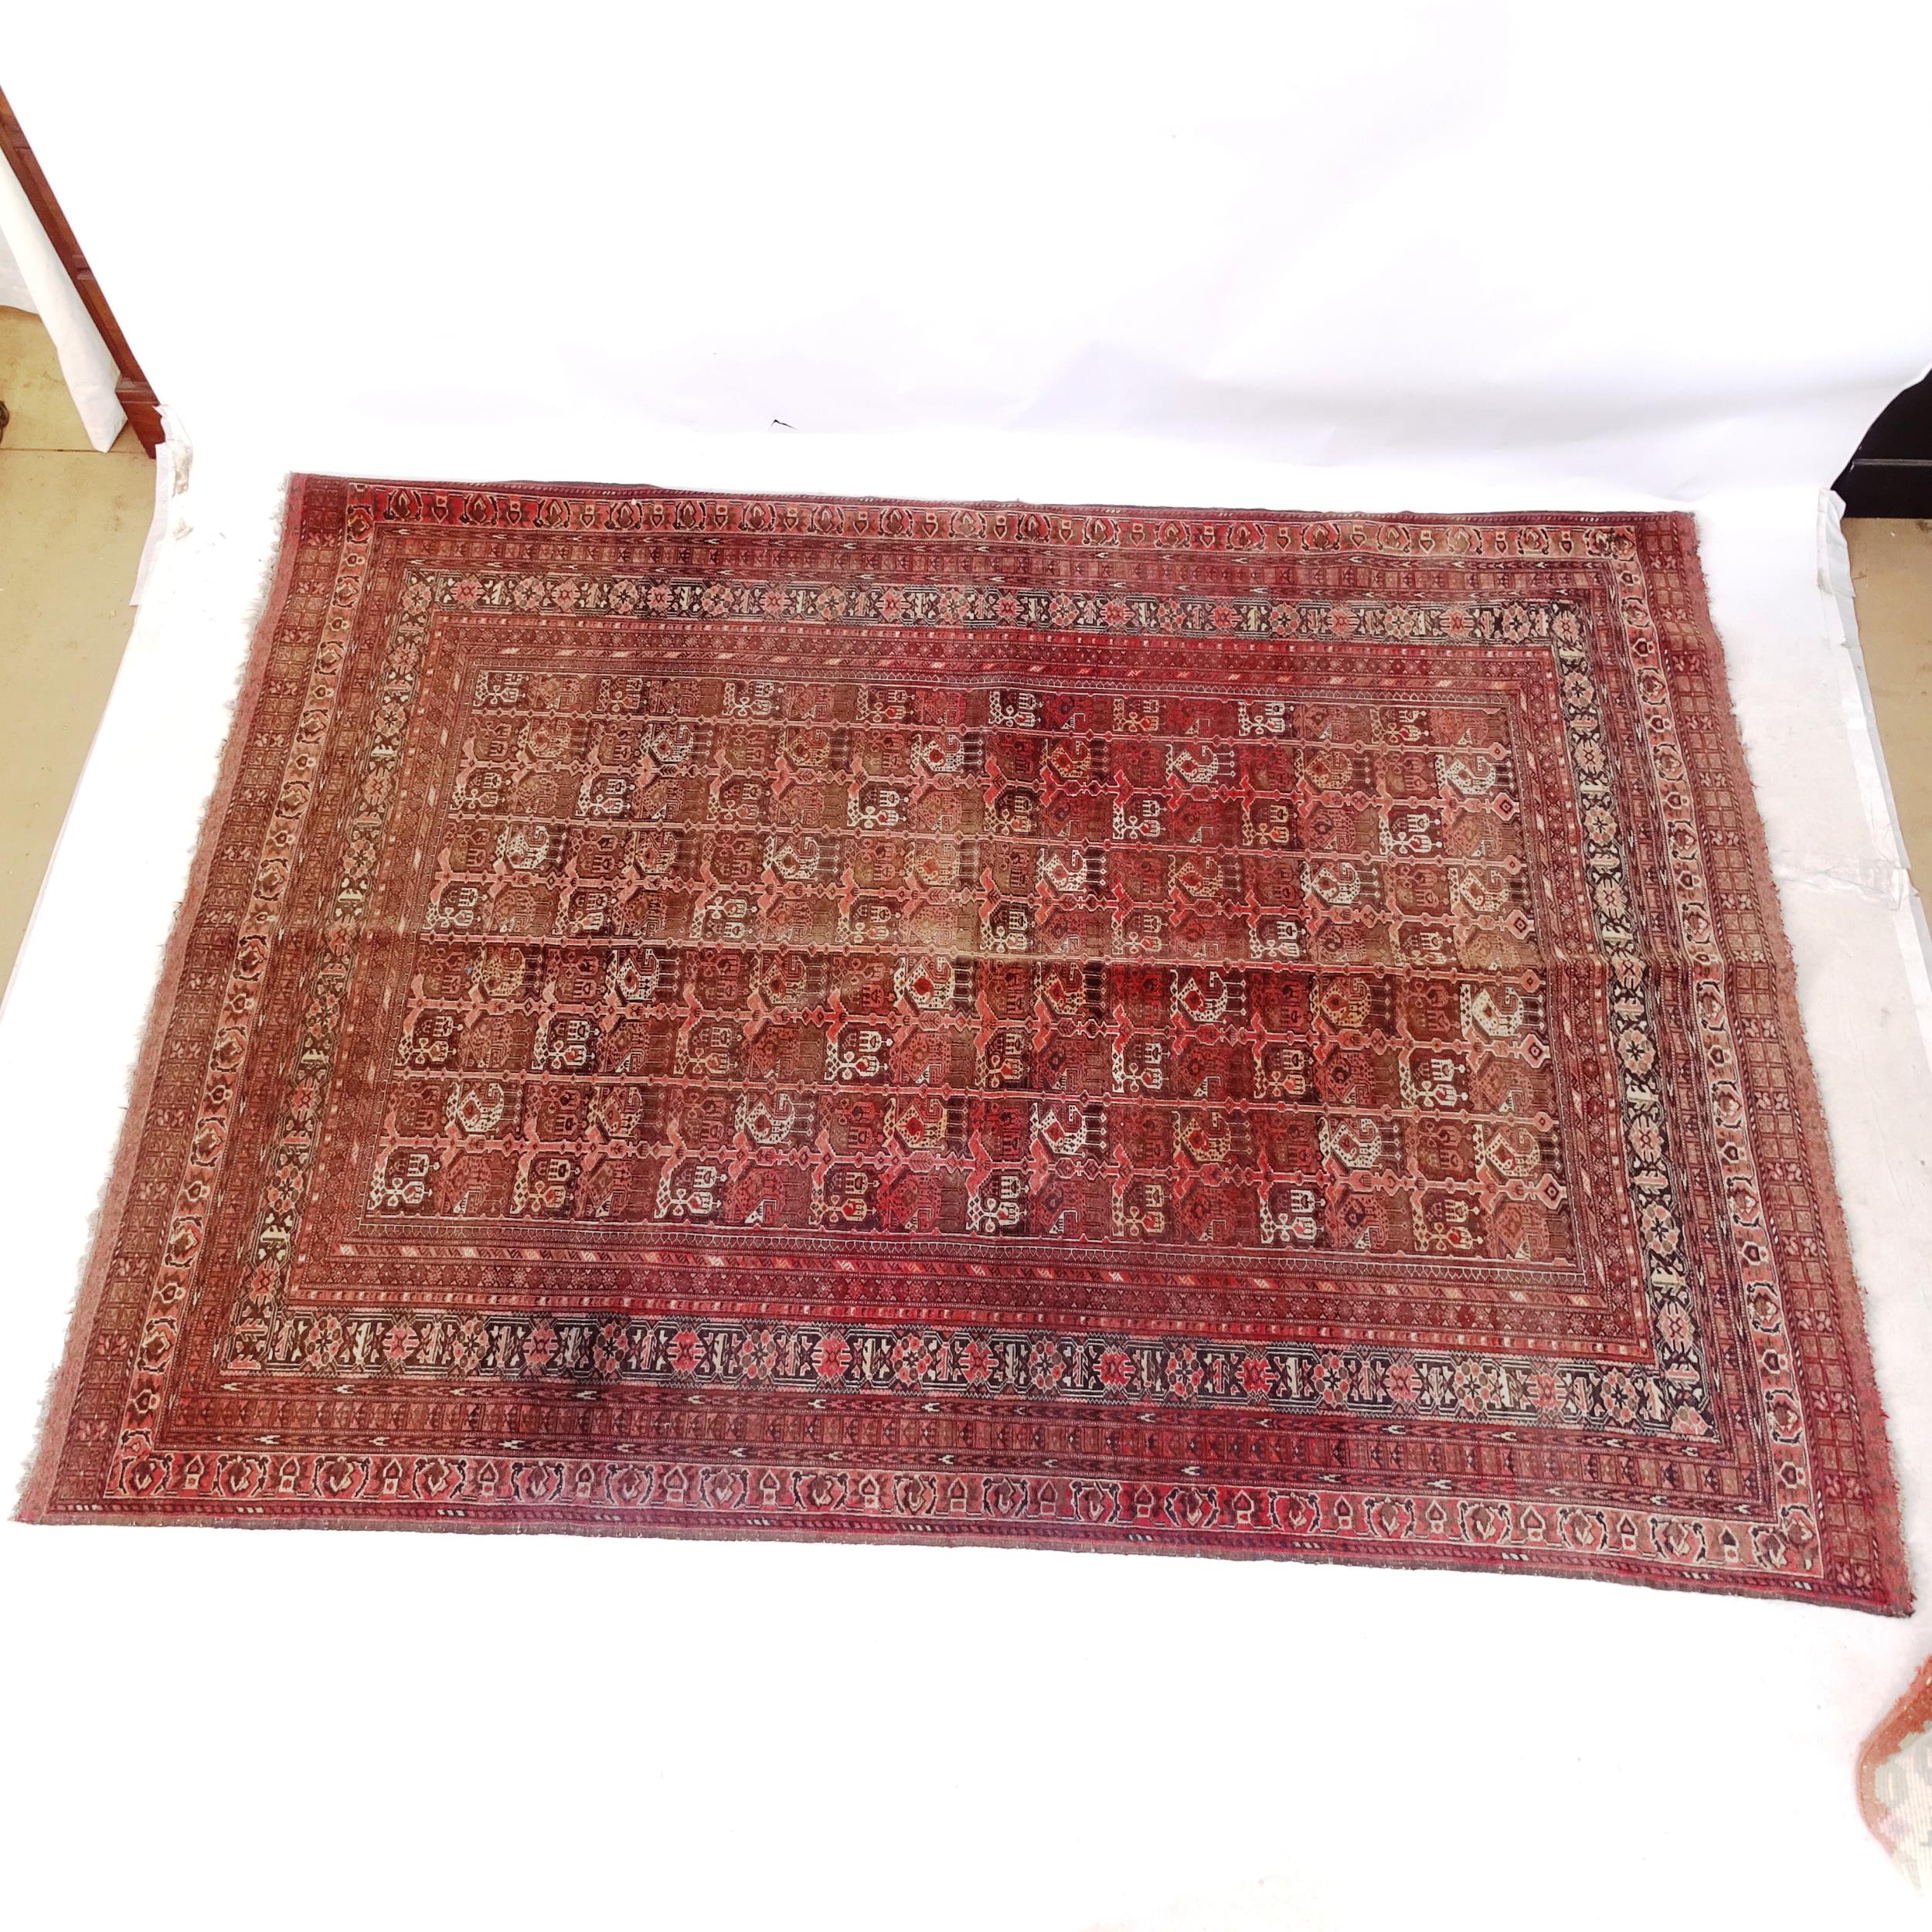 An Antique red ground Hamadan rug, 230cm x 170cm